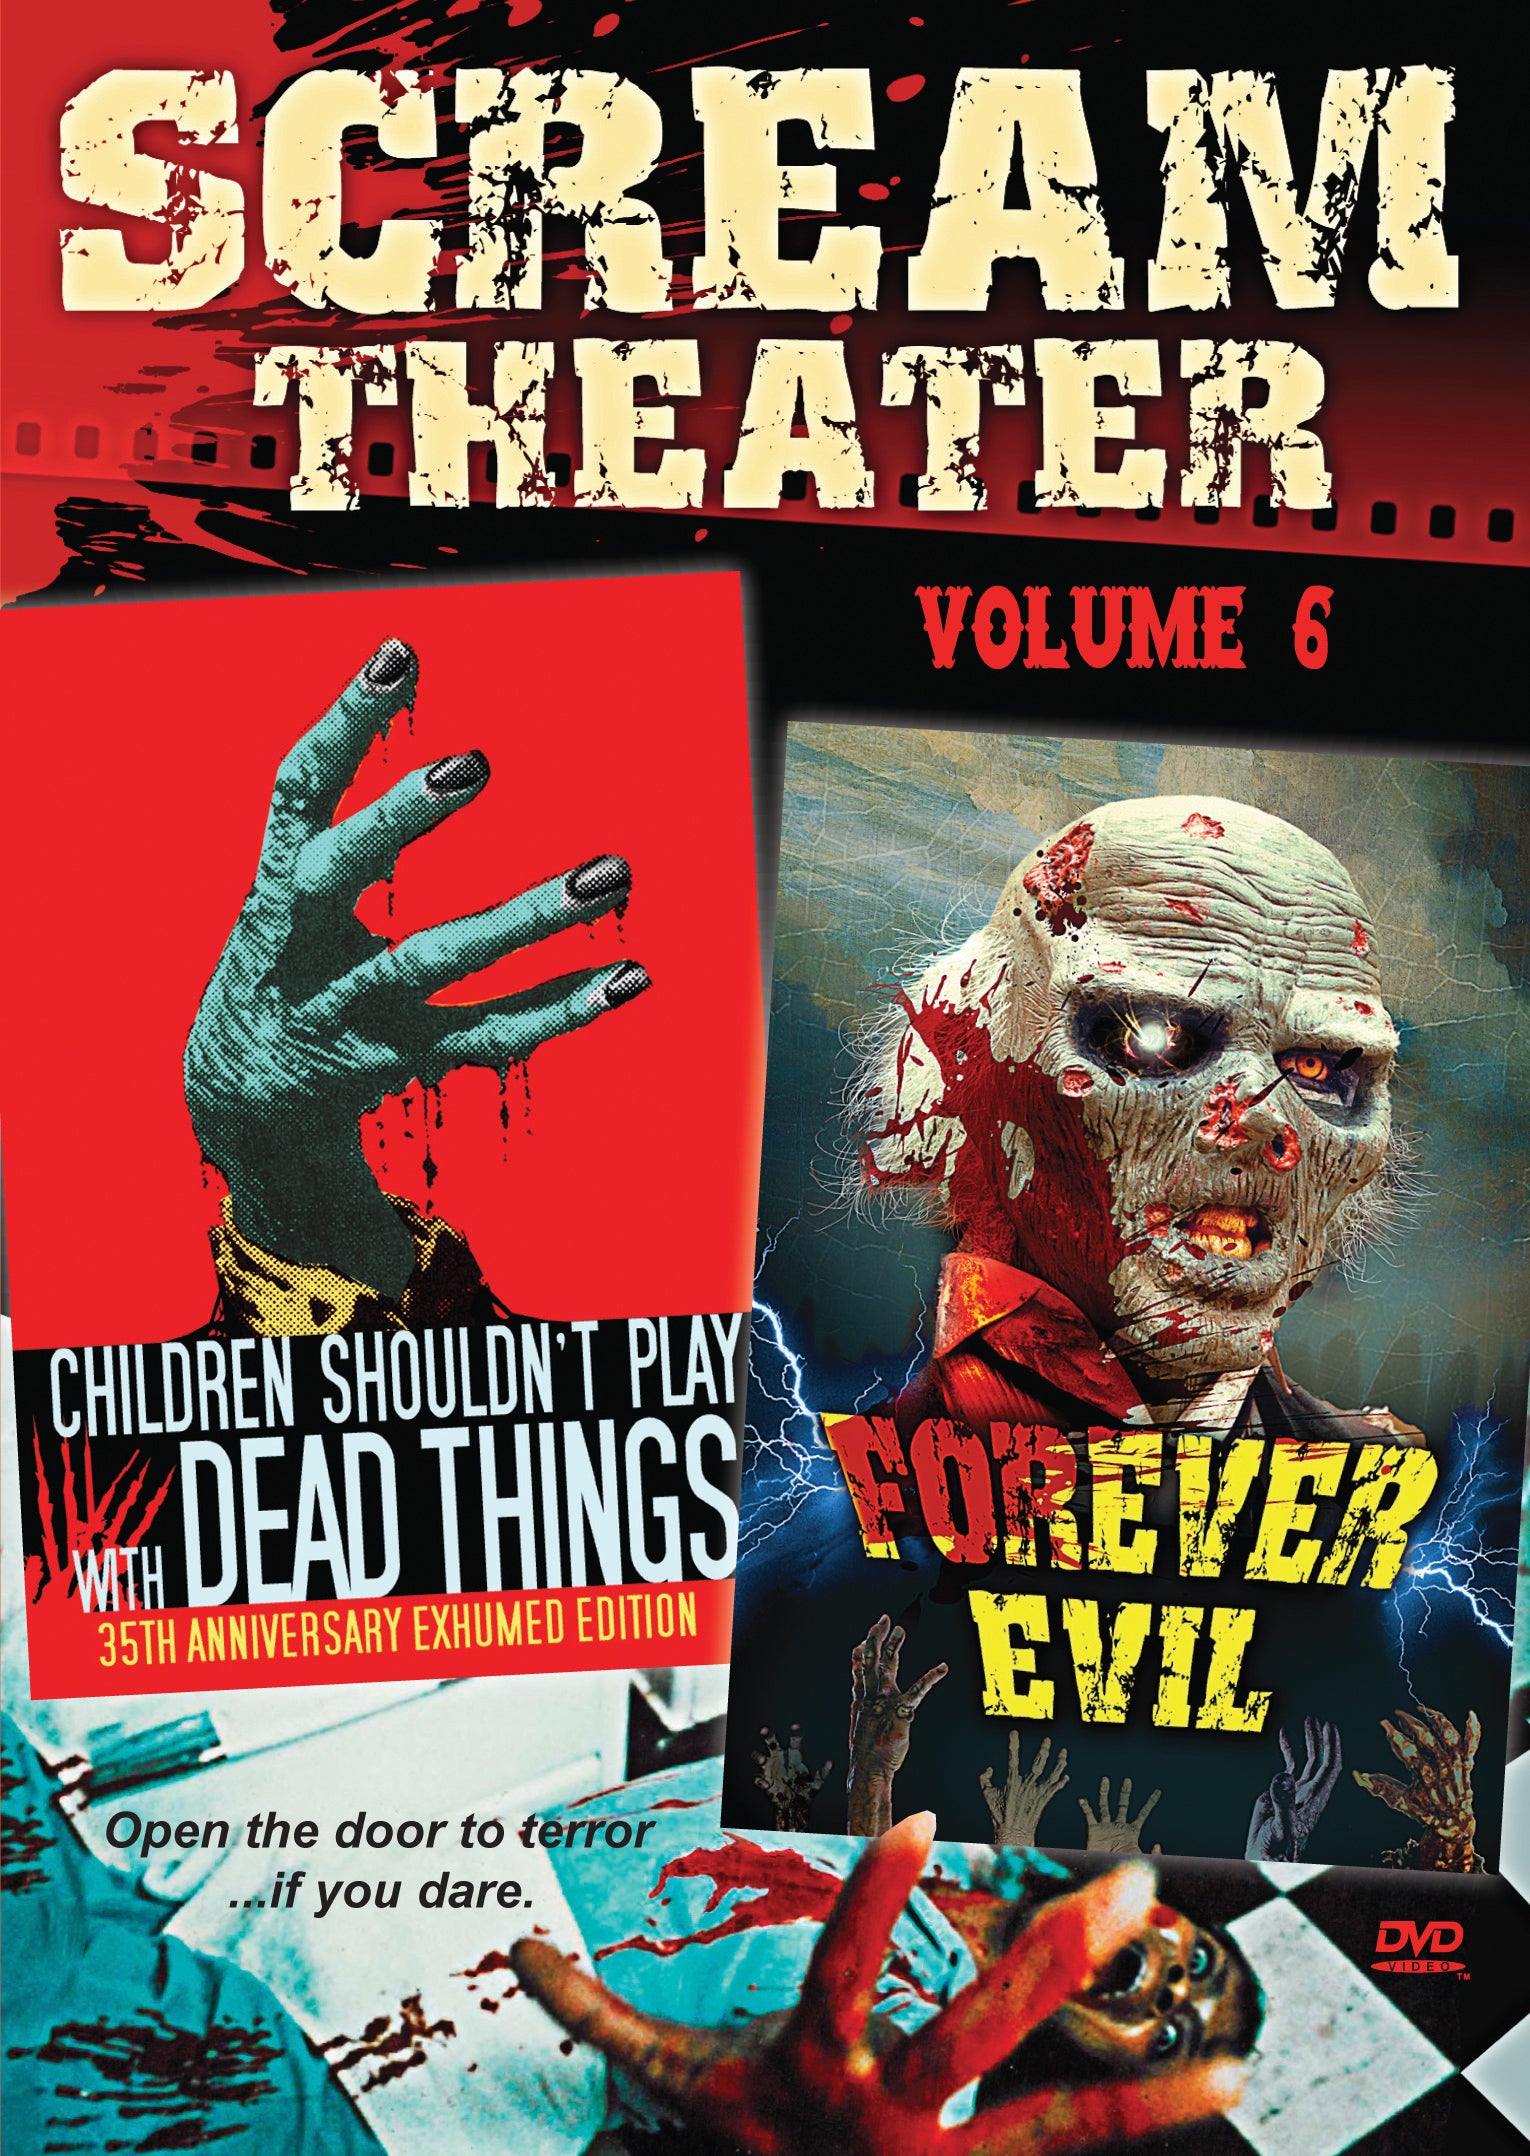 SCREAM THEATER VOLUME 6 DVD